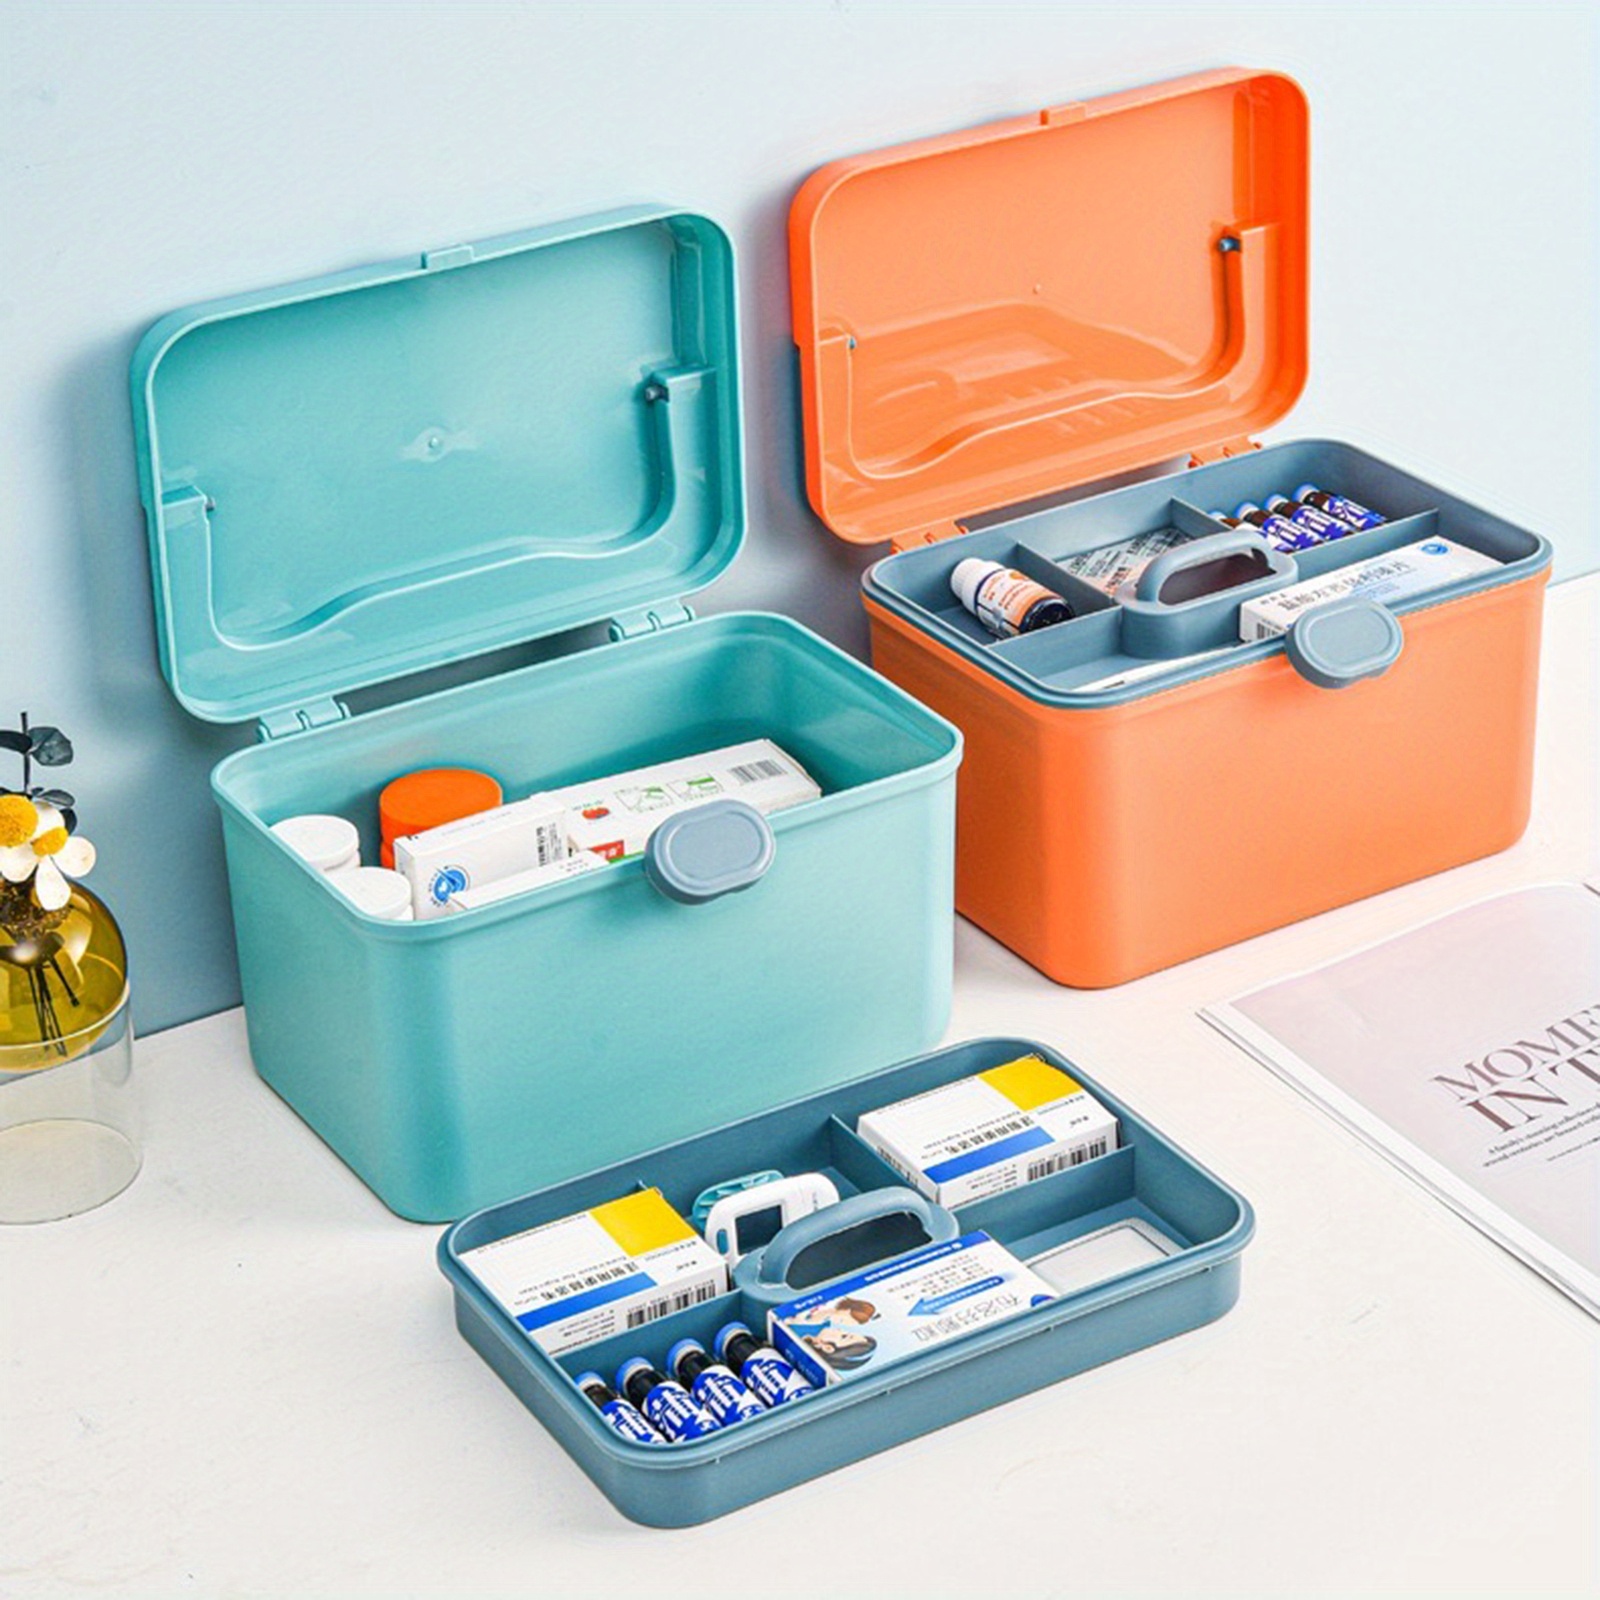  ZSQSM First Aid Kit Portable Emergency Box Plastic Medicine  Storage Box Travel Family Medicine Lock Organizer for Workplace  (JJ10111328-536-WJH) : Health & Household